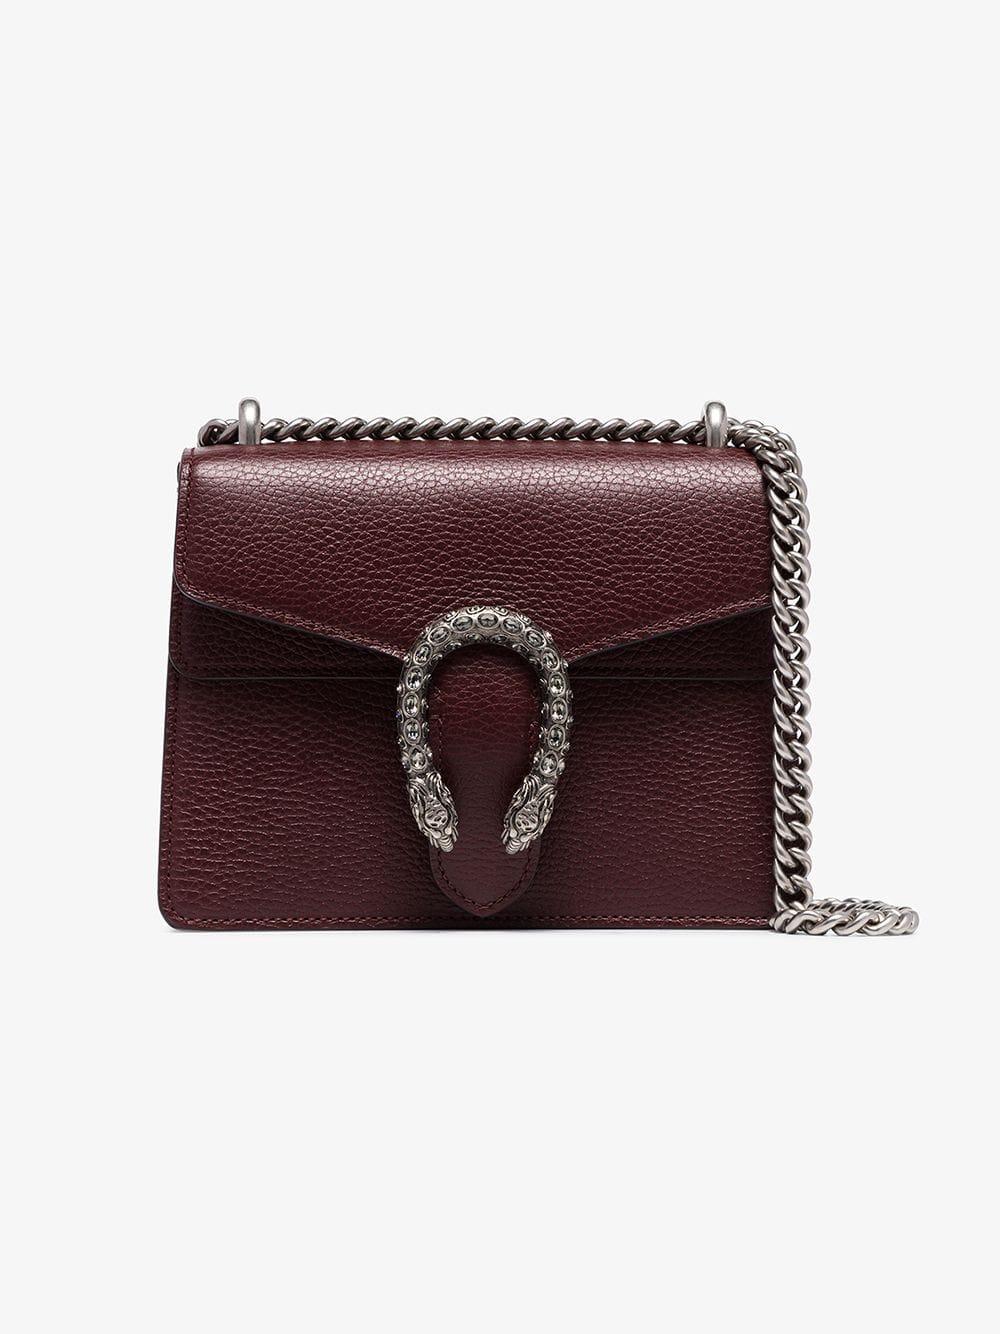 burgundy gucci purse